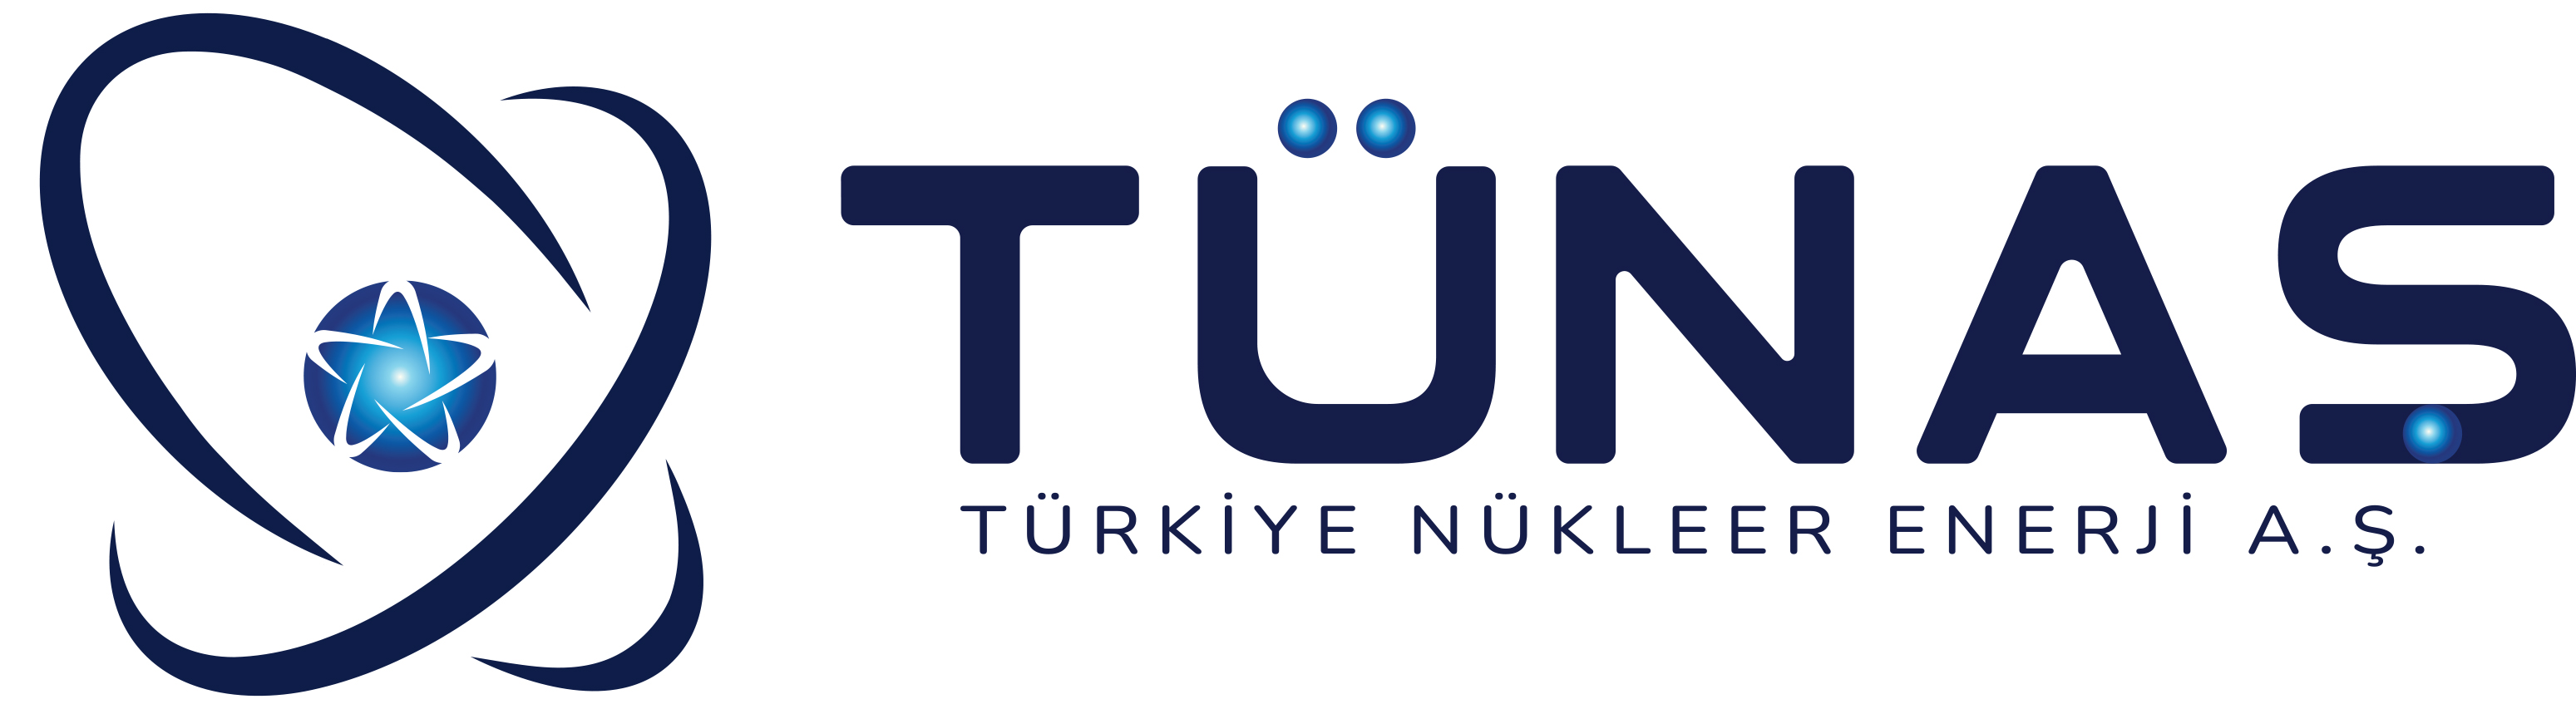 TÜNAS logo